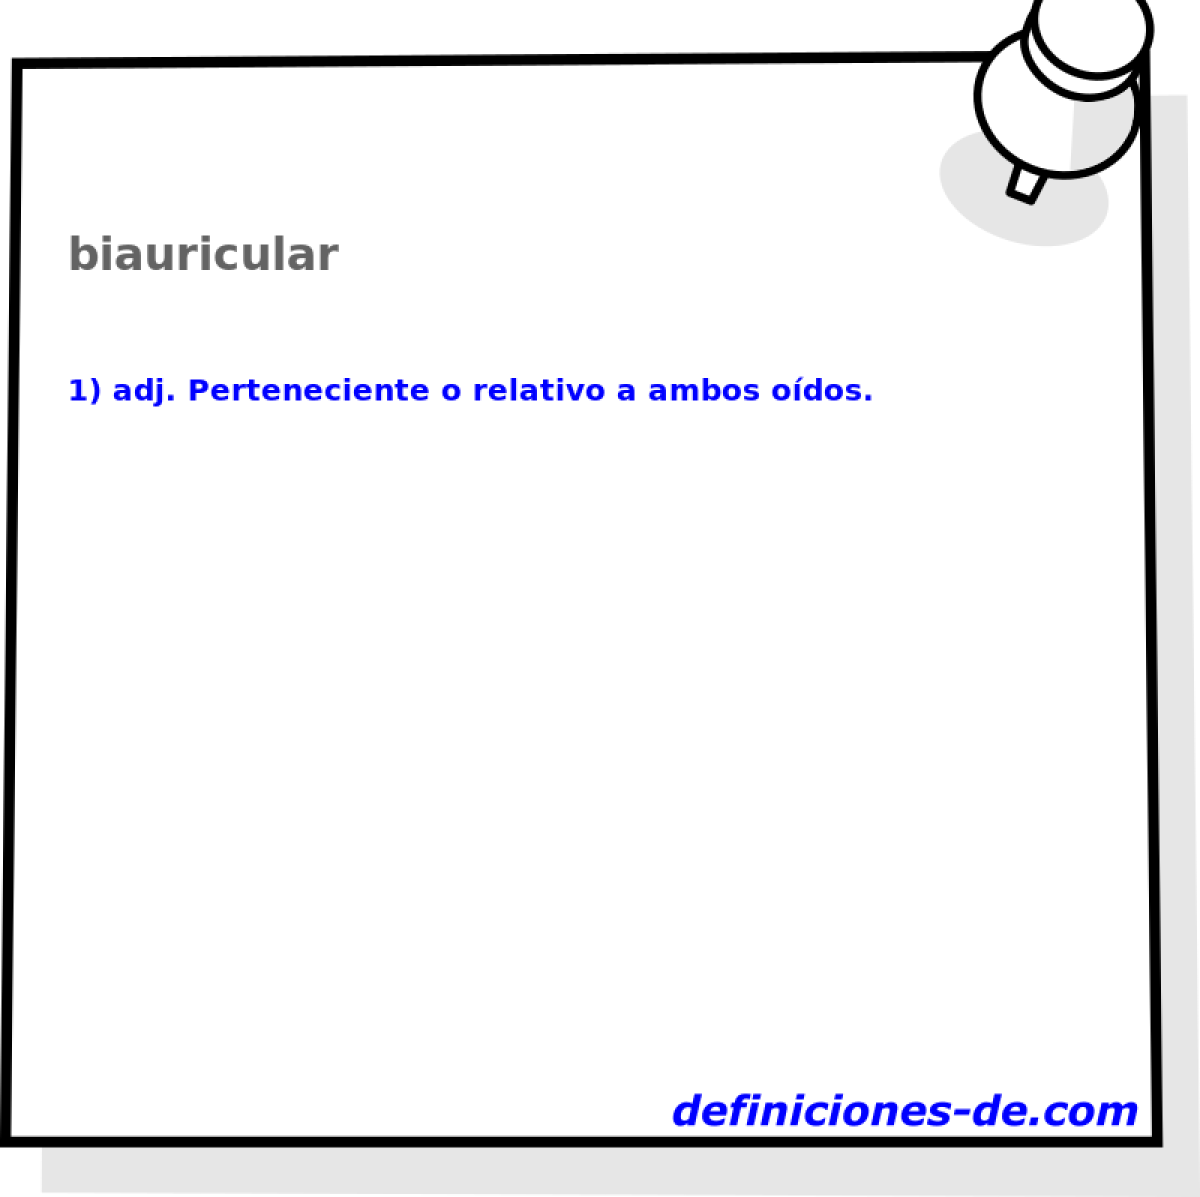 biauricular 